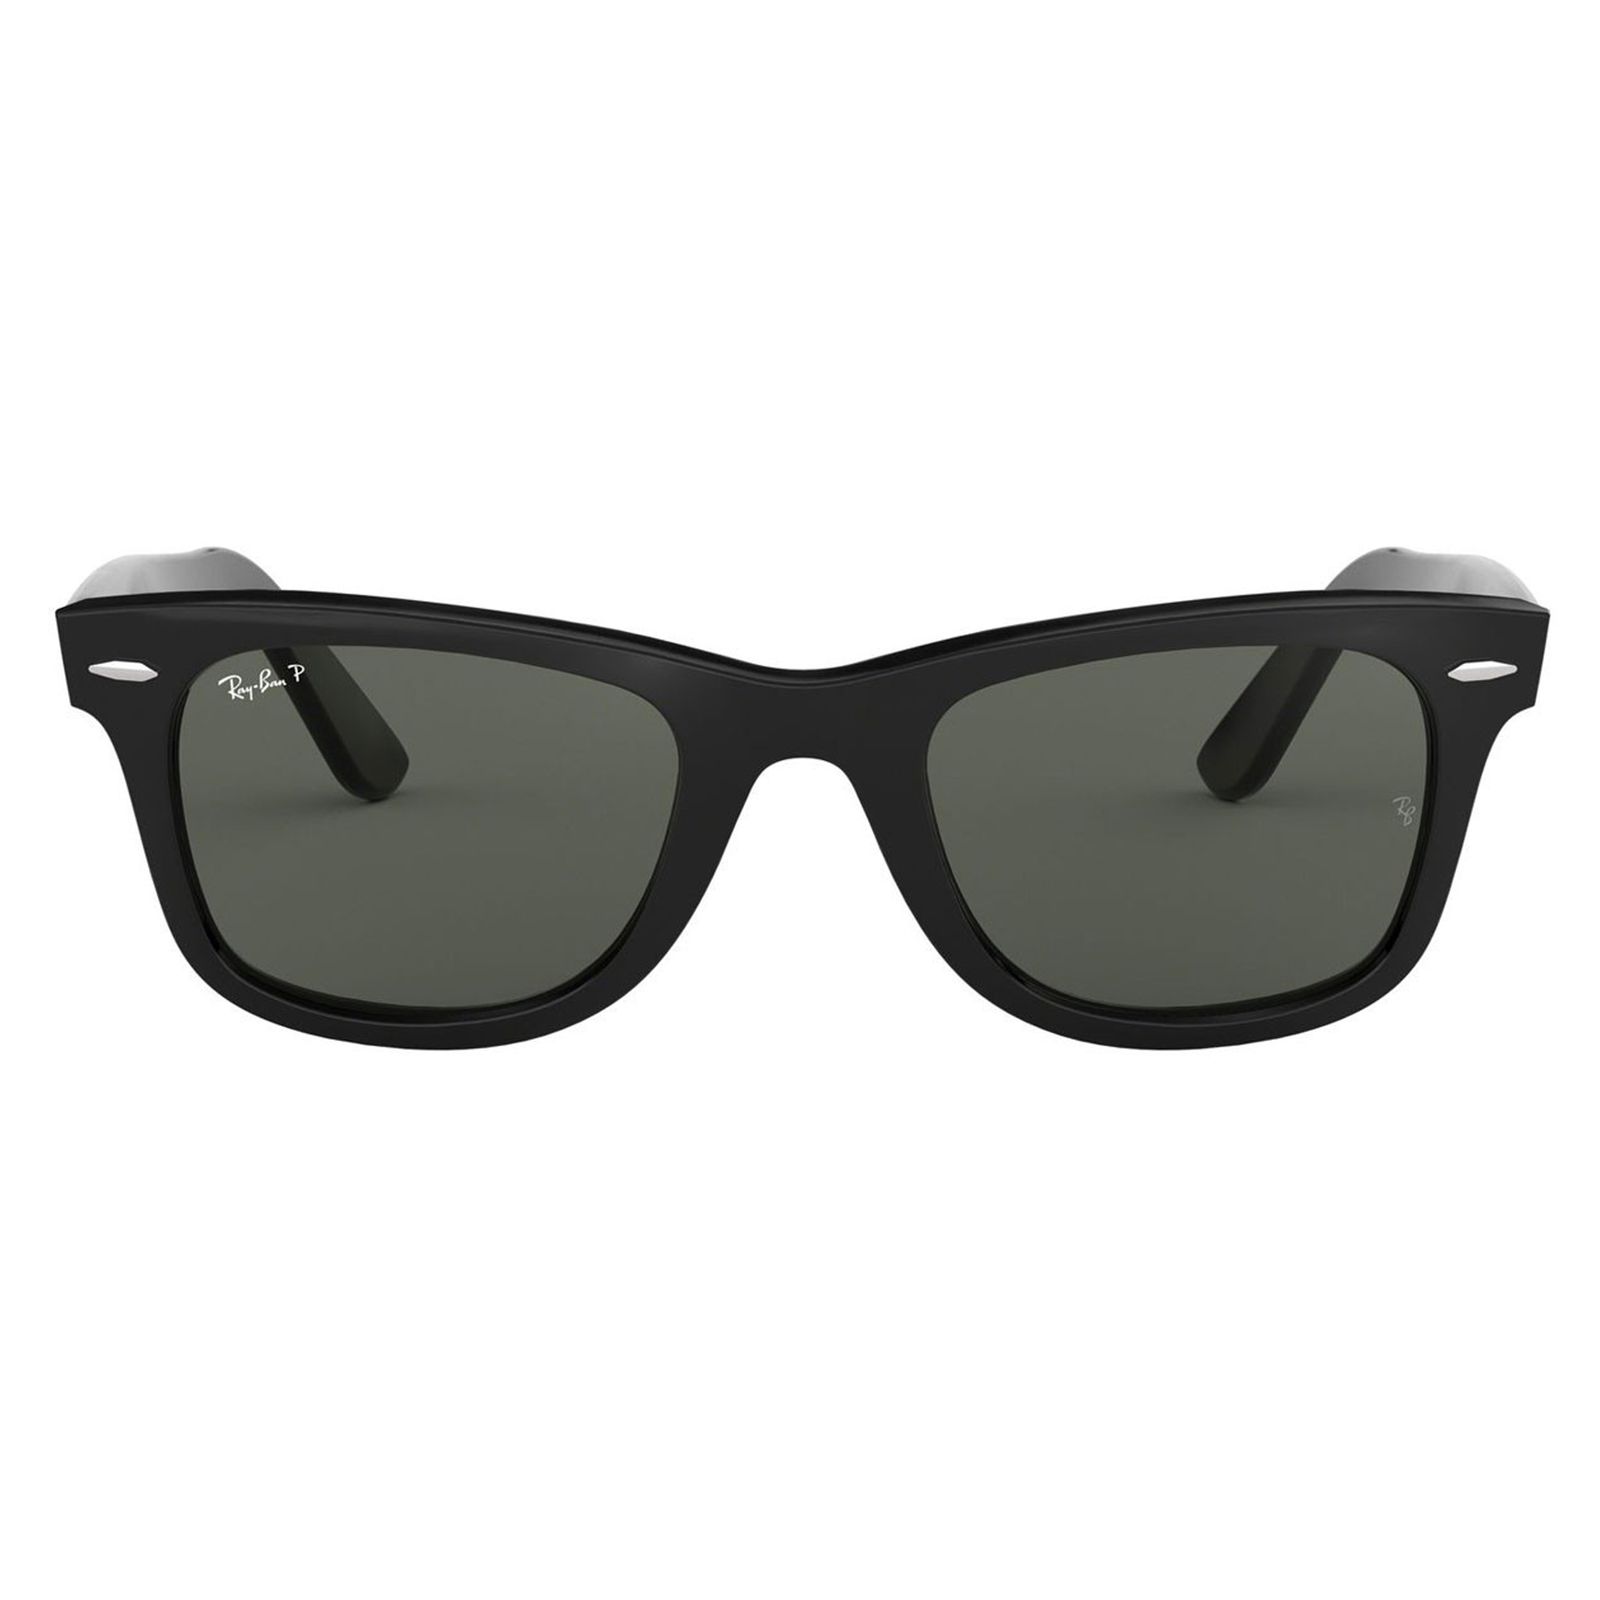 عینک آفتابی ری بن مدل 2140-901/58-54 - مشکی - 1